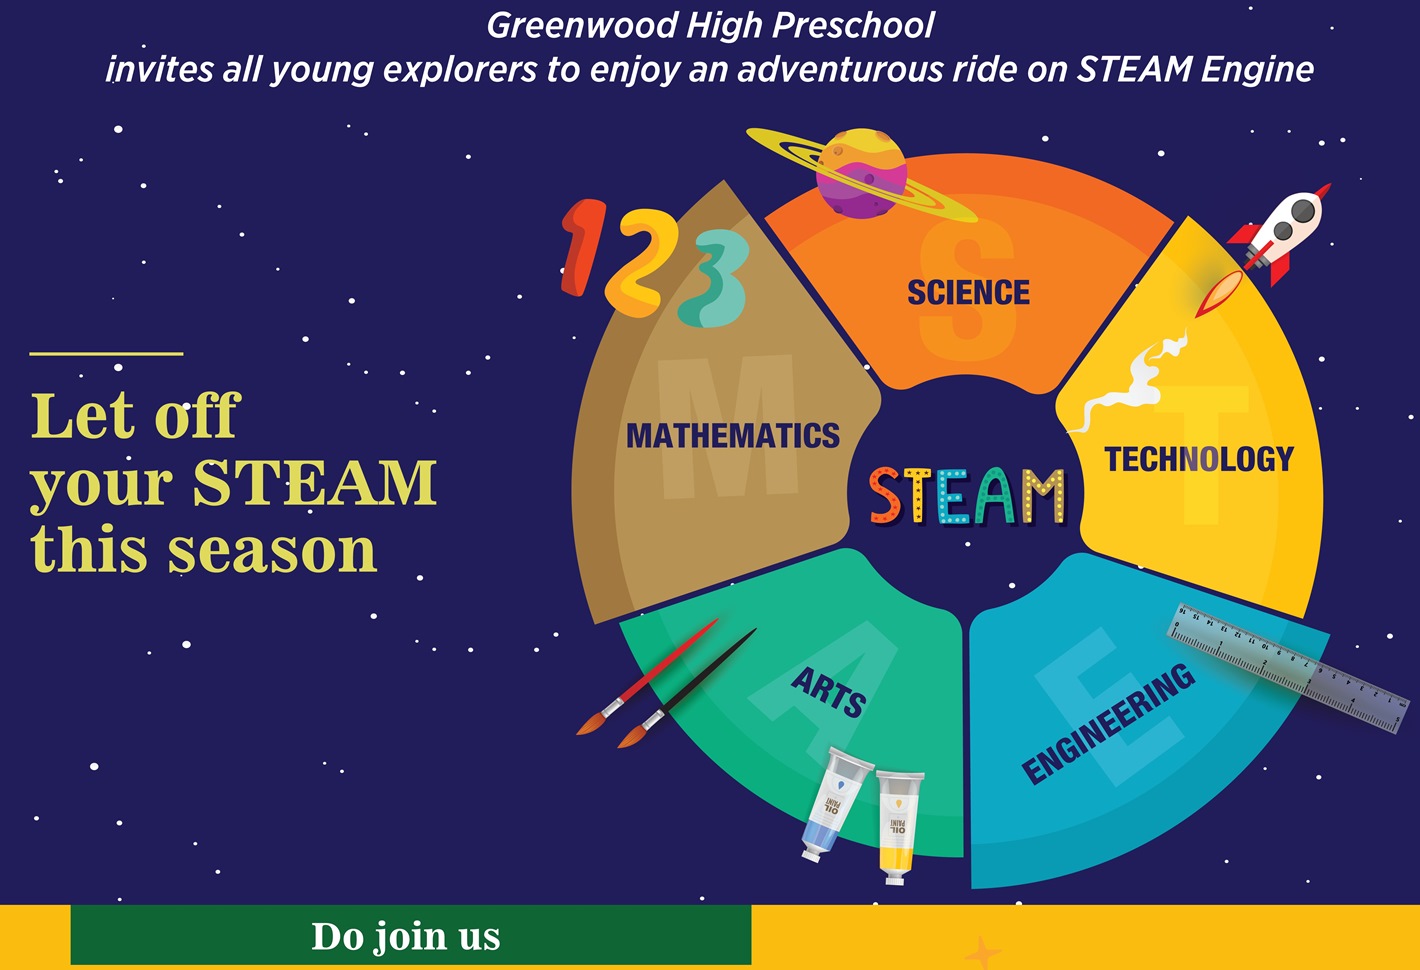 greenwood-high-preschool-to-host-steam-event-for-kids